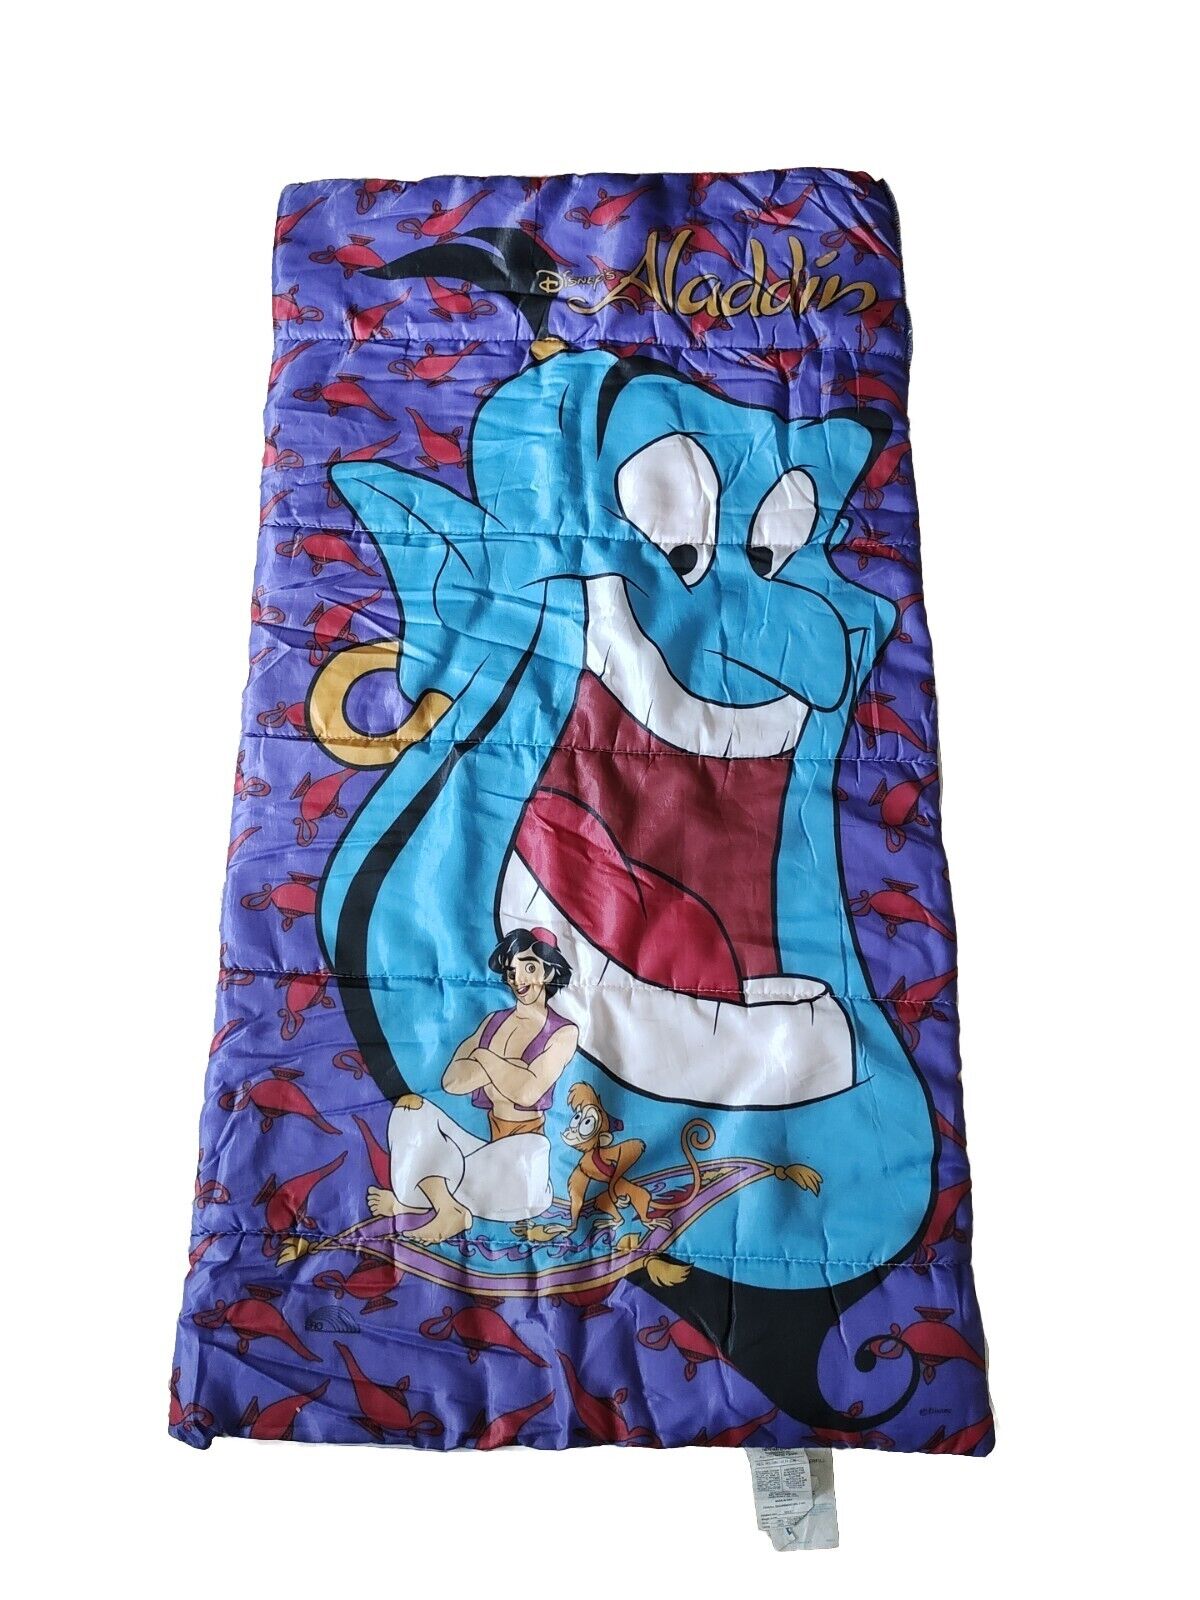 Vintage 90s Disney Aladdin Sleeping Bag - Genie - Abu - Carpet - Kids / Teens